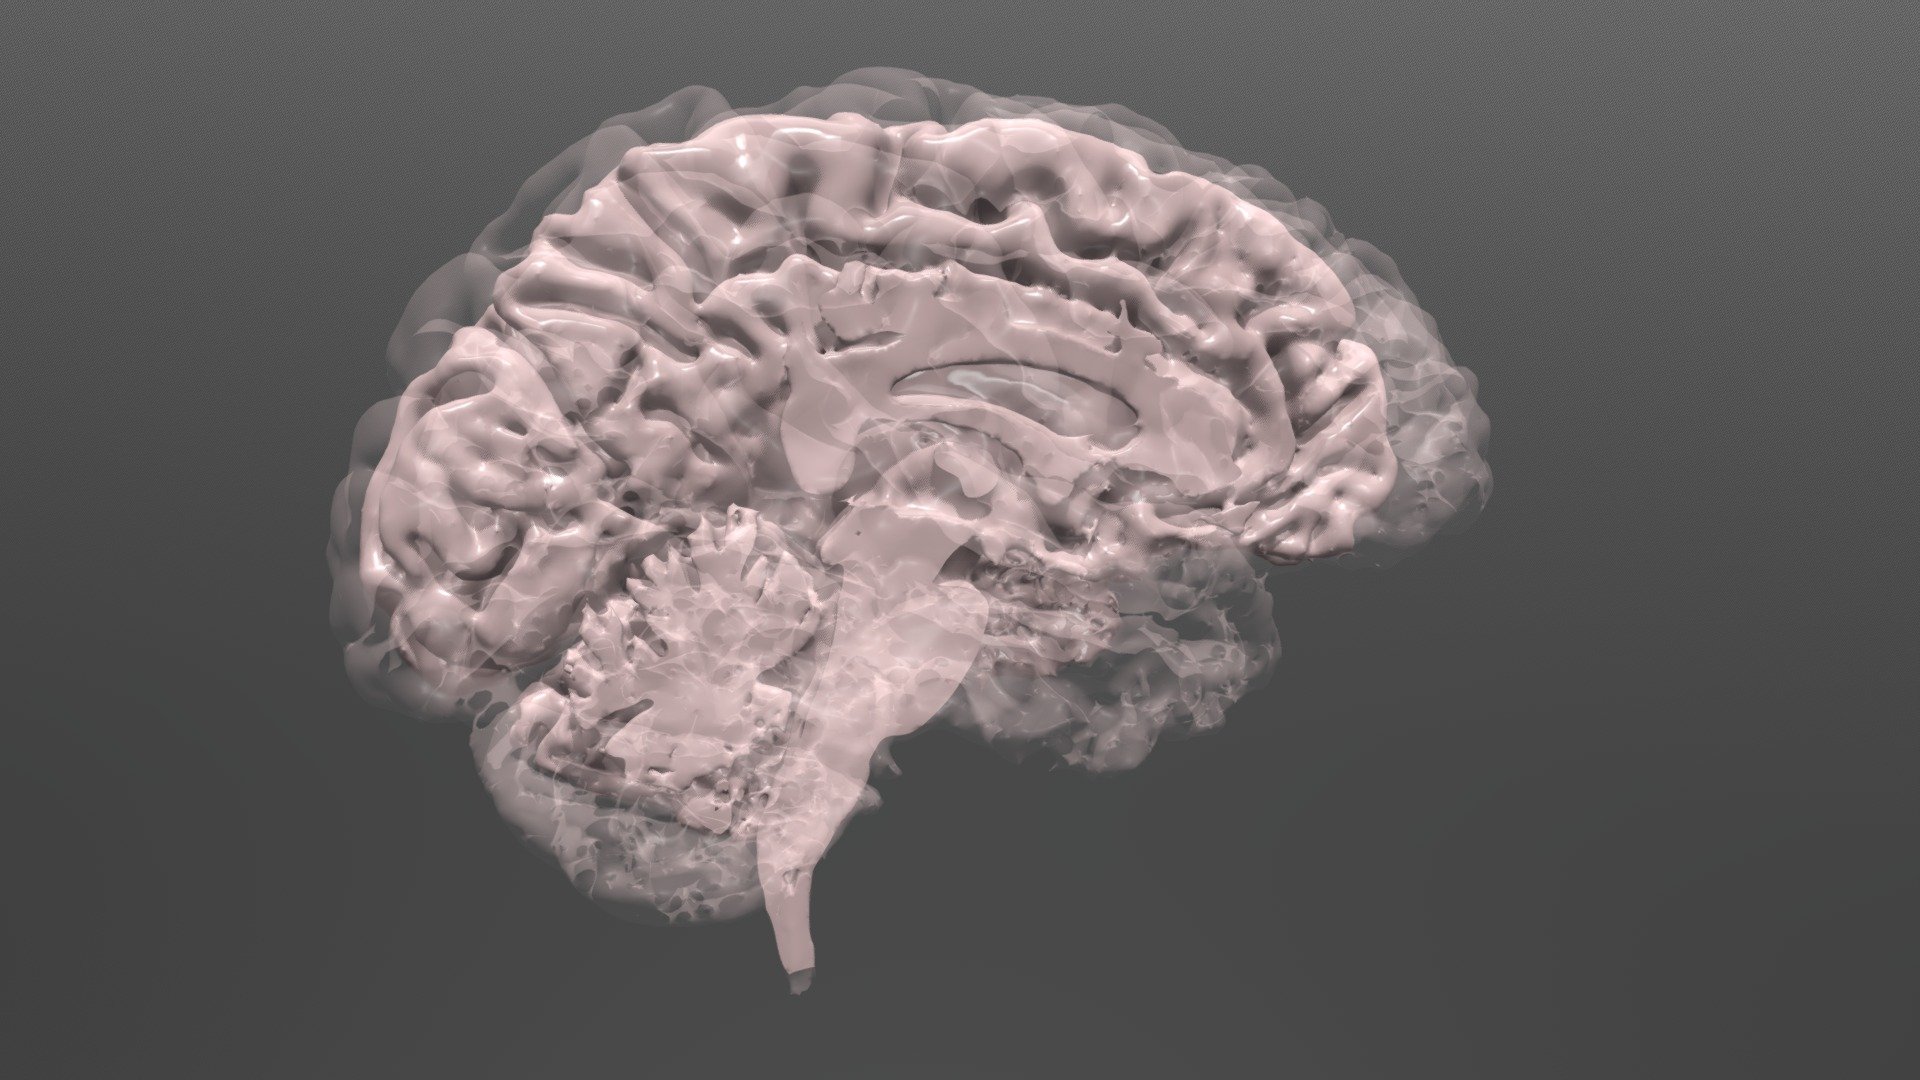 Human Brain - Left Half and Right Half